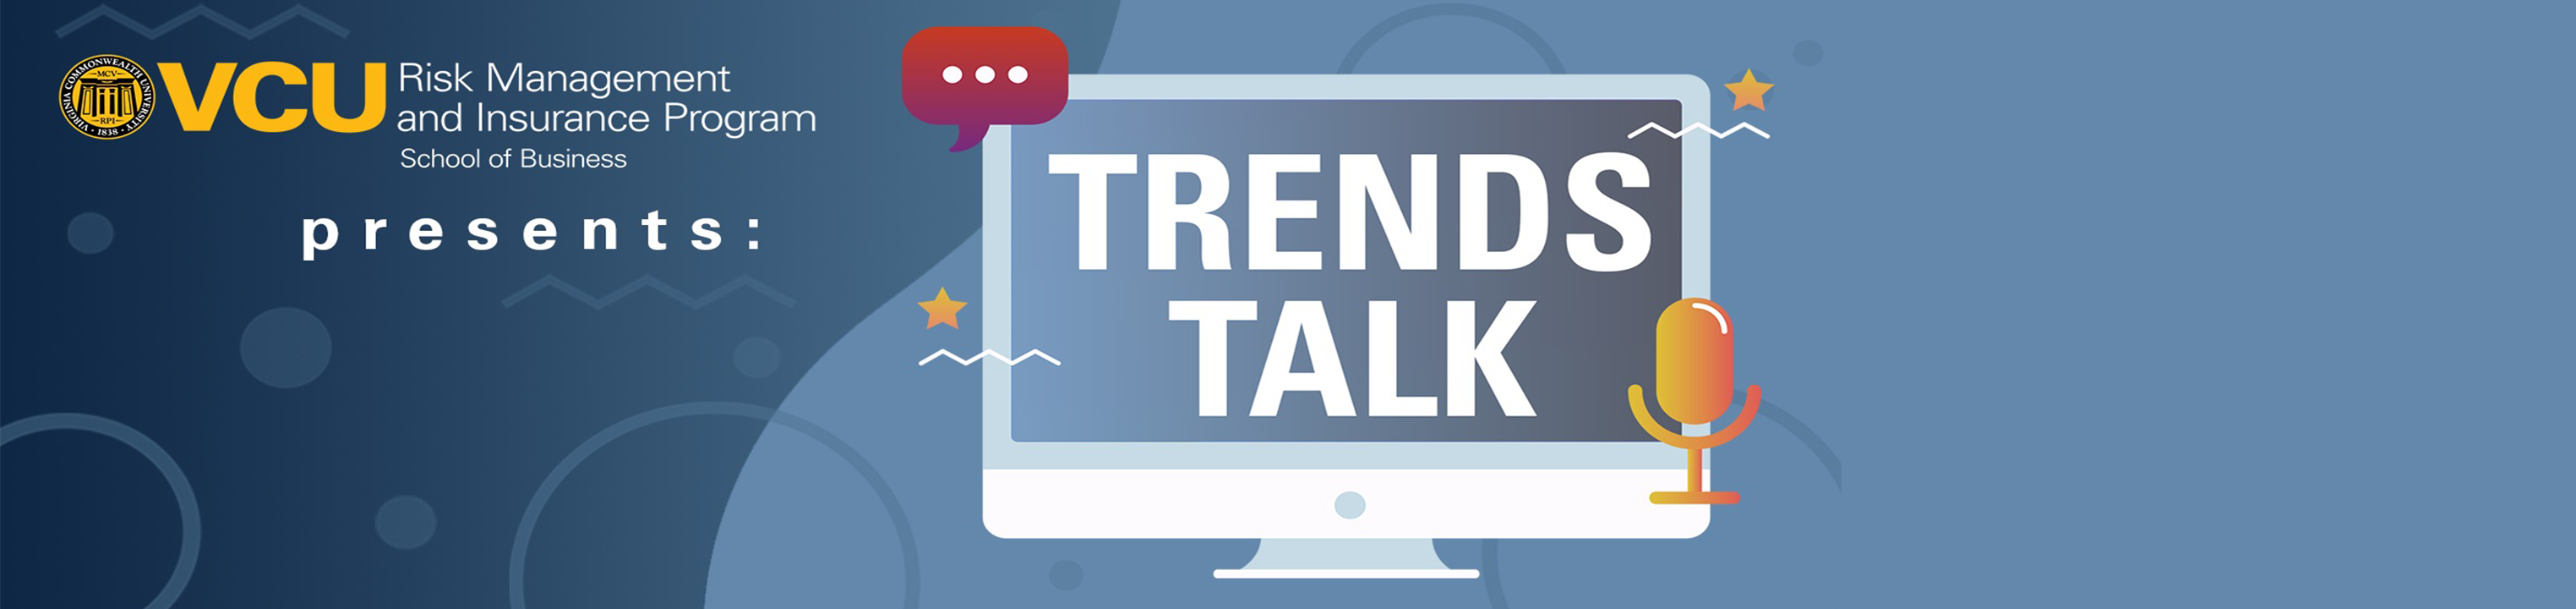 RMI Trends Talk banner